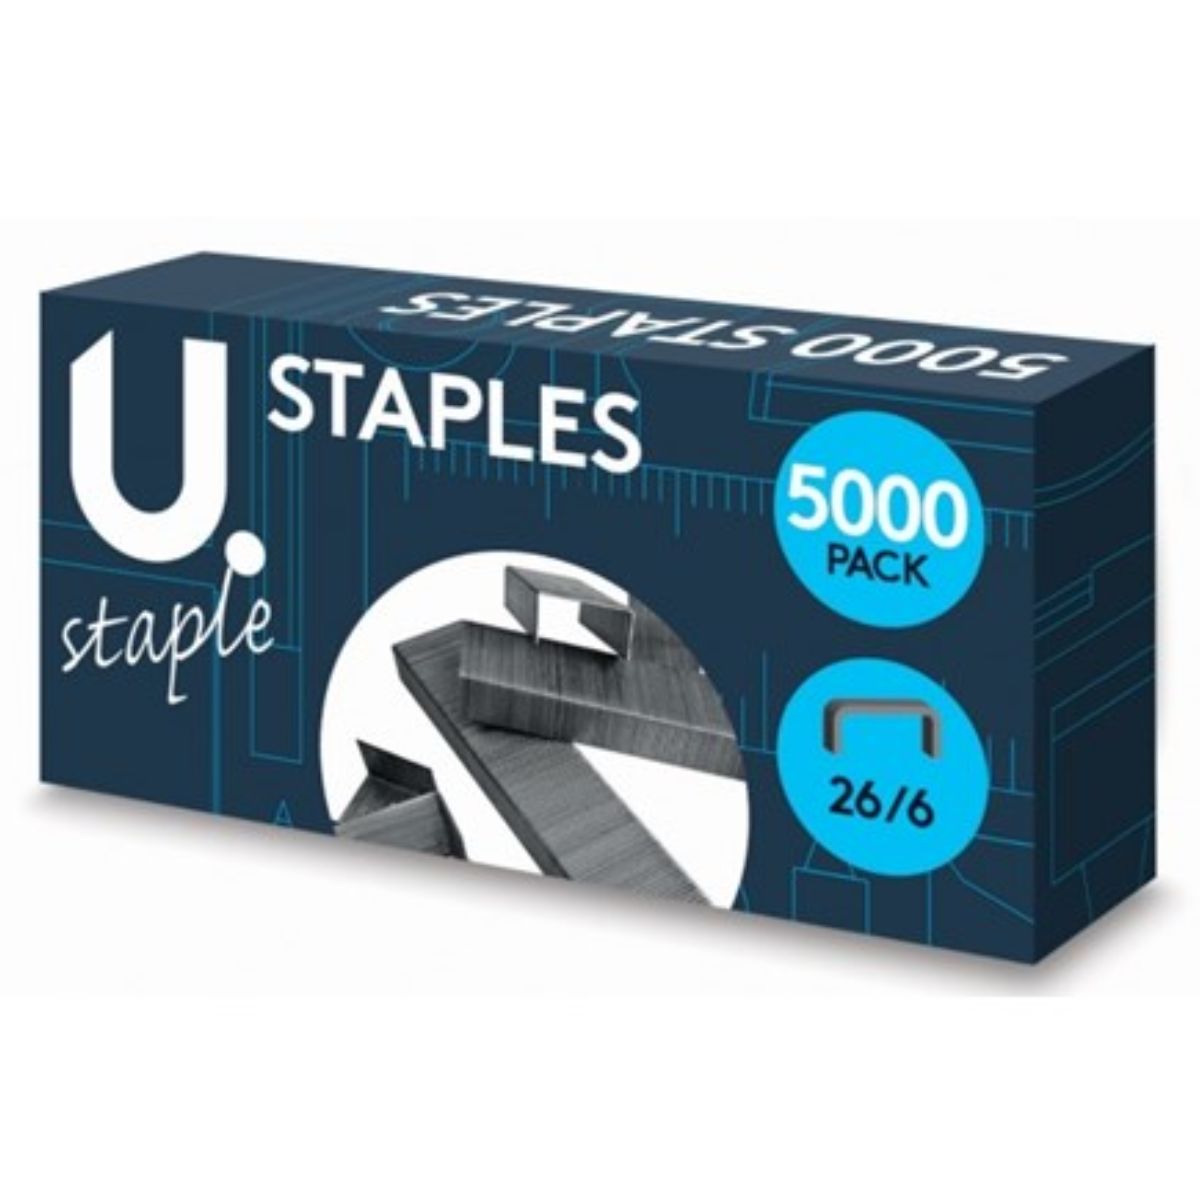 A box of Staples - 5000pcs u-shaped staples, size 26/6.